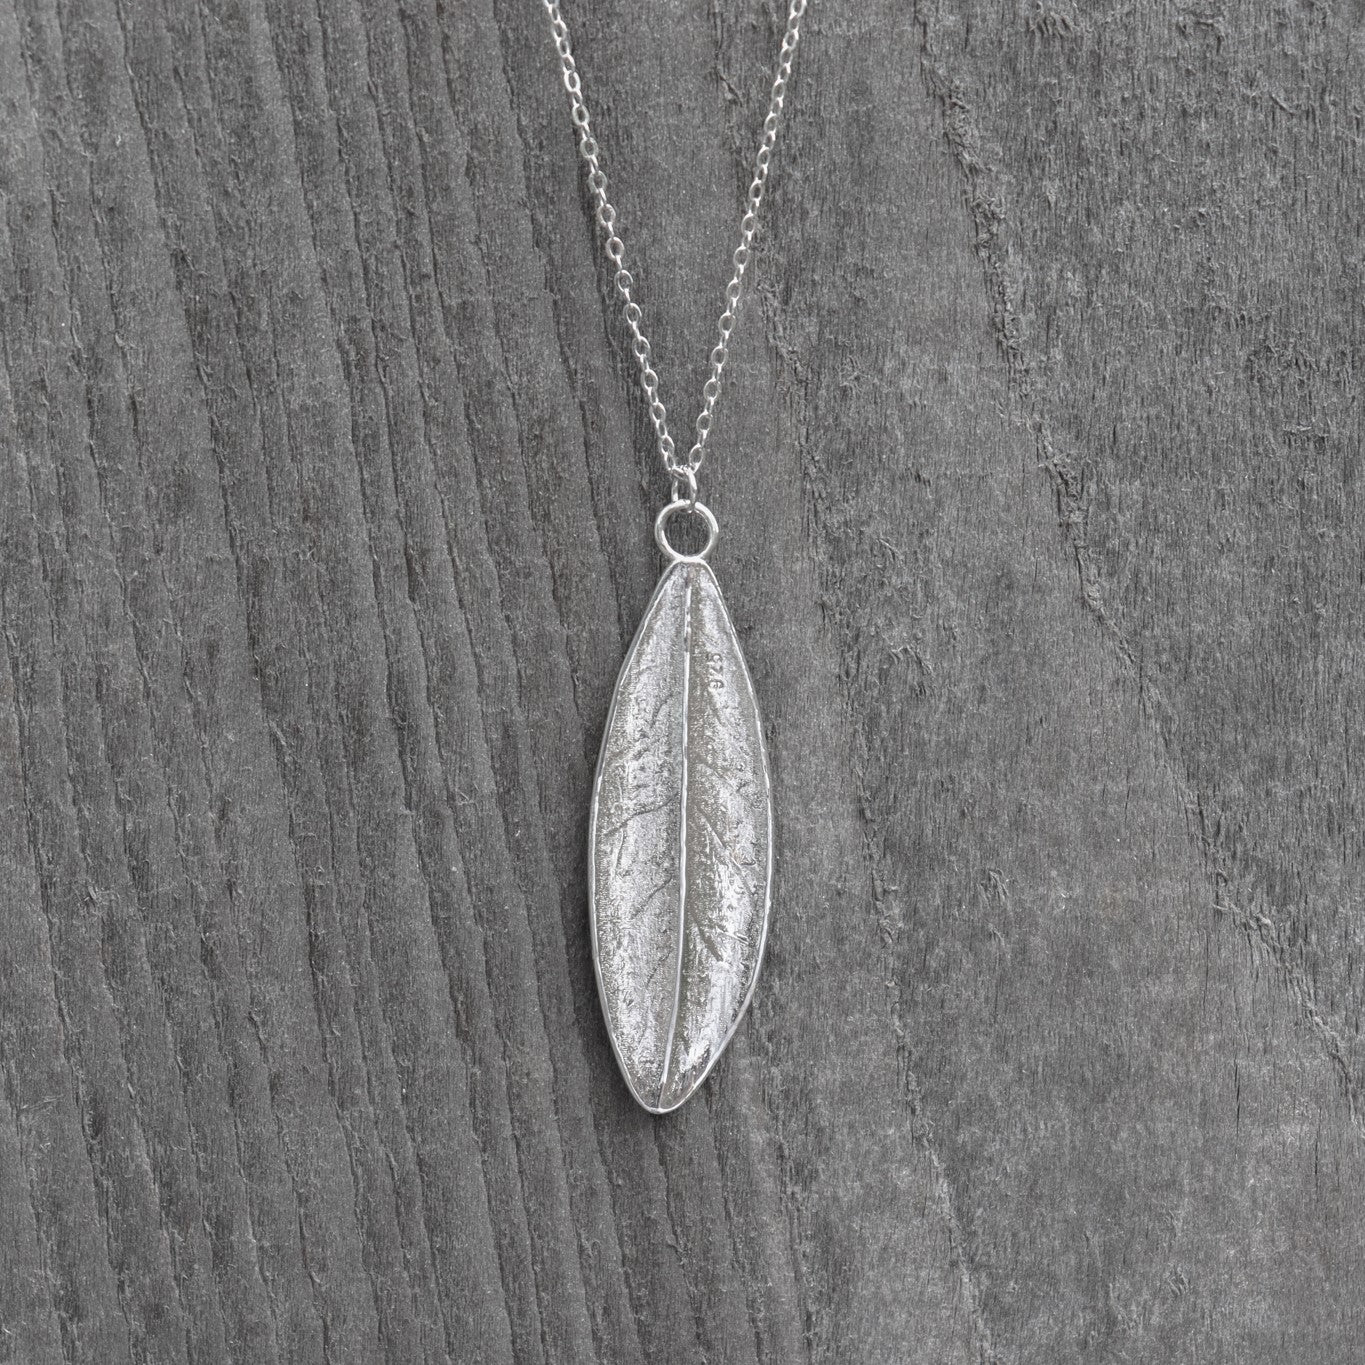 single pendant olive leaf necklace rajaeen